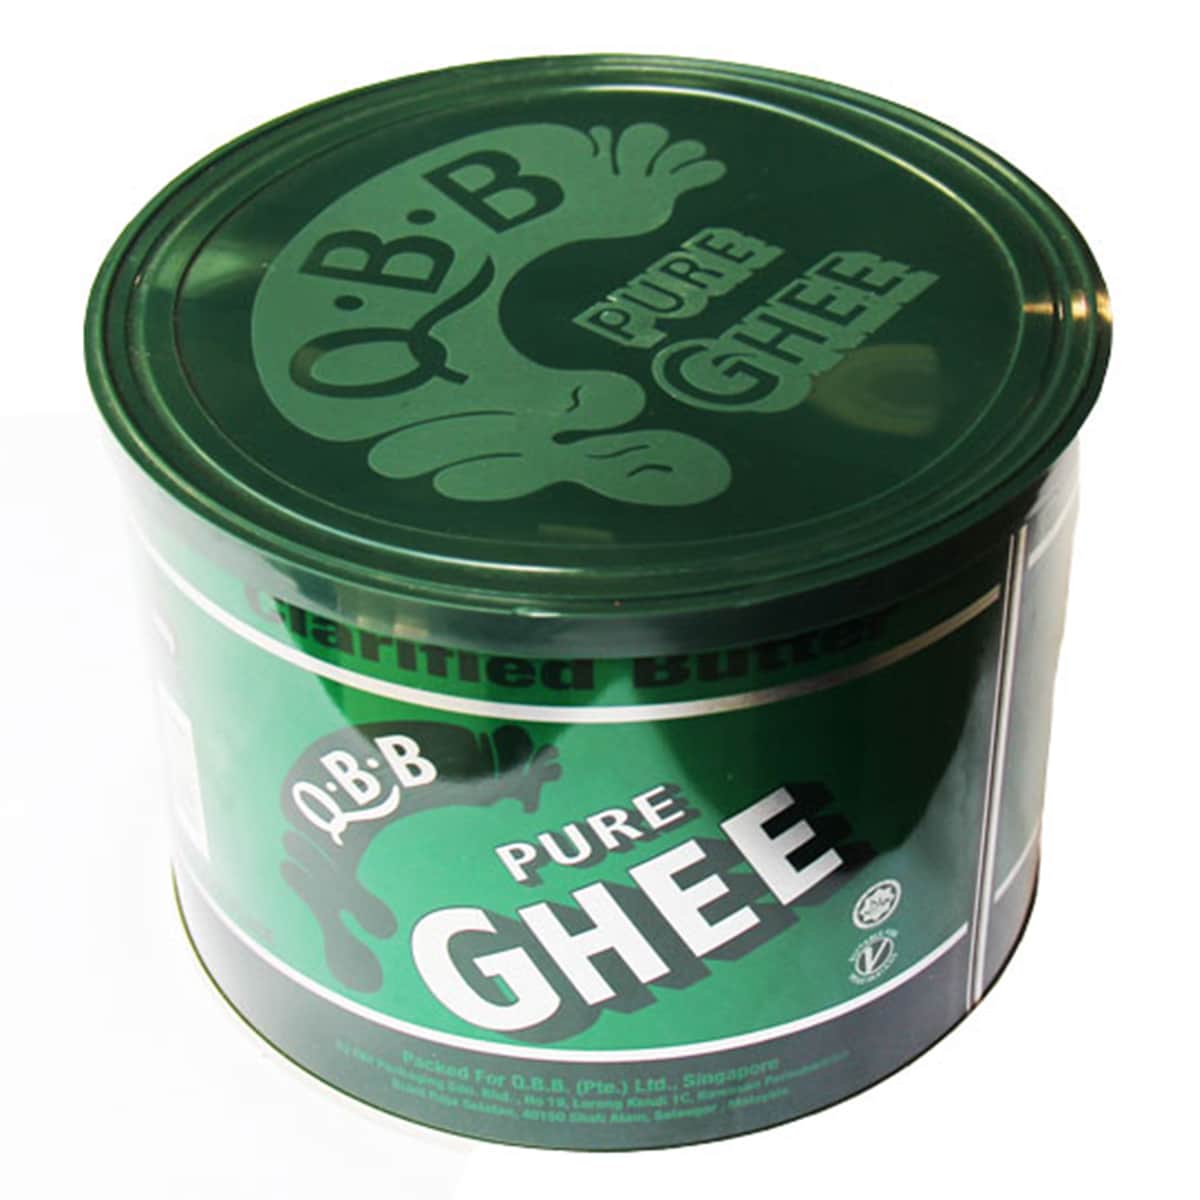 Buy QBB Pure Ghee (Clarified Butter) - 400 gm